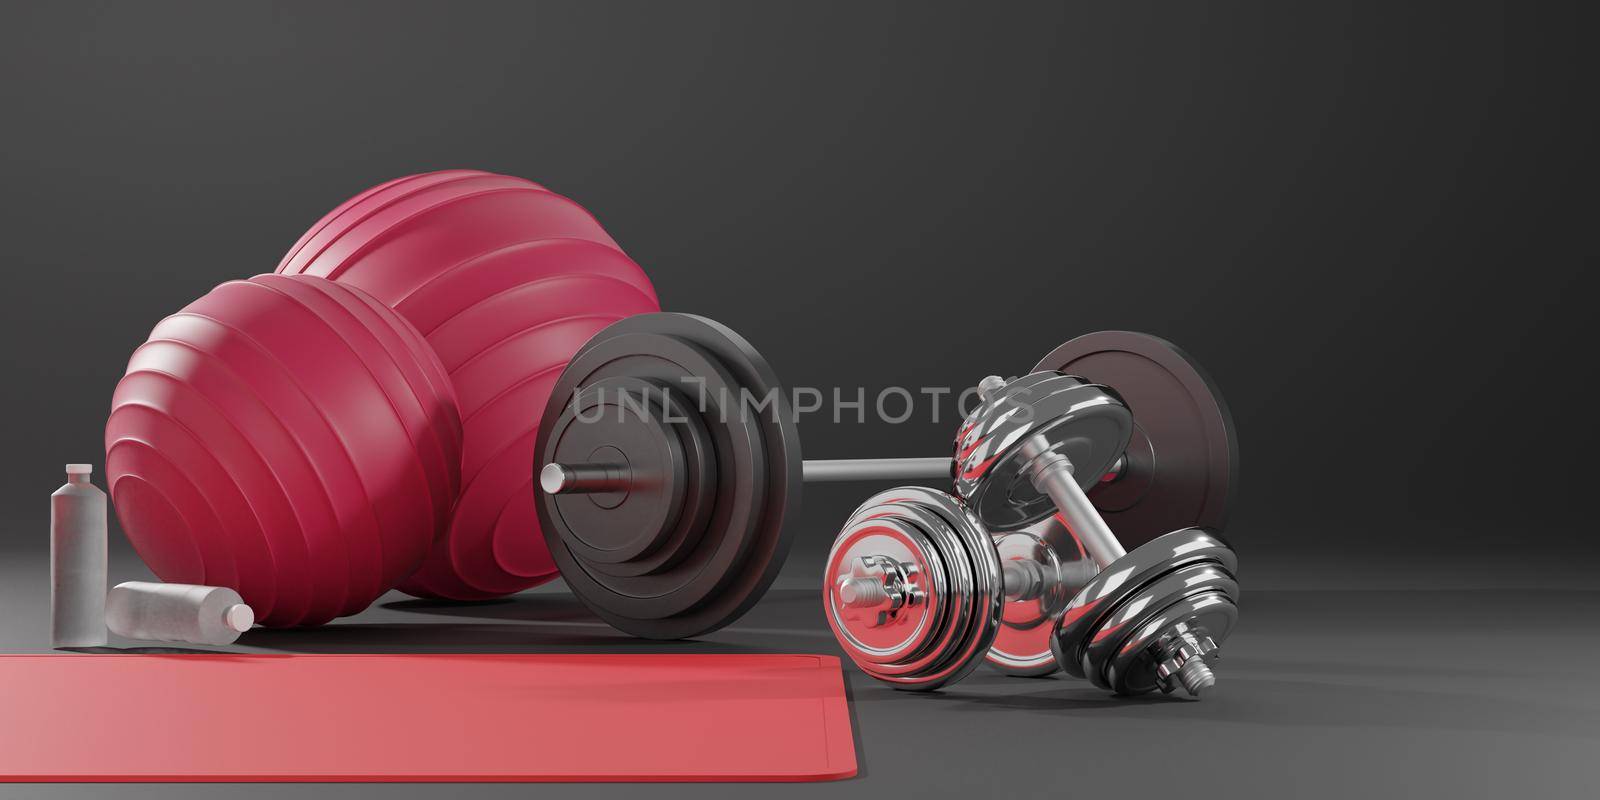 Sport fitness equipment, yoga mat, fitness ball, bottle of water, dumbbells and barbell on black background. 3D rendering.